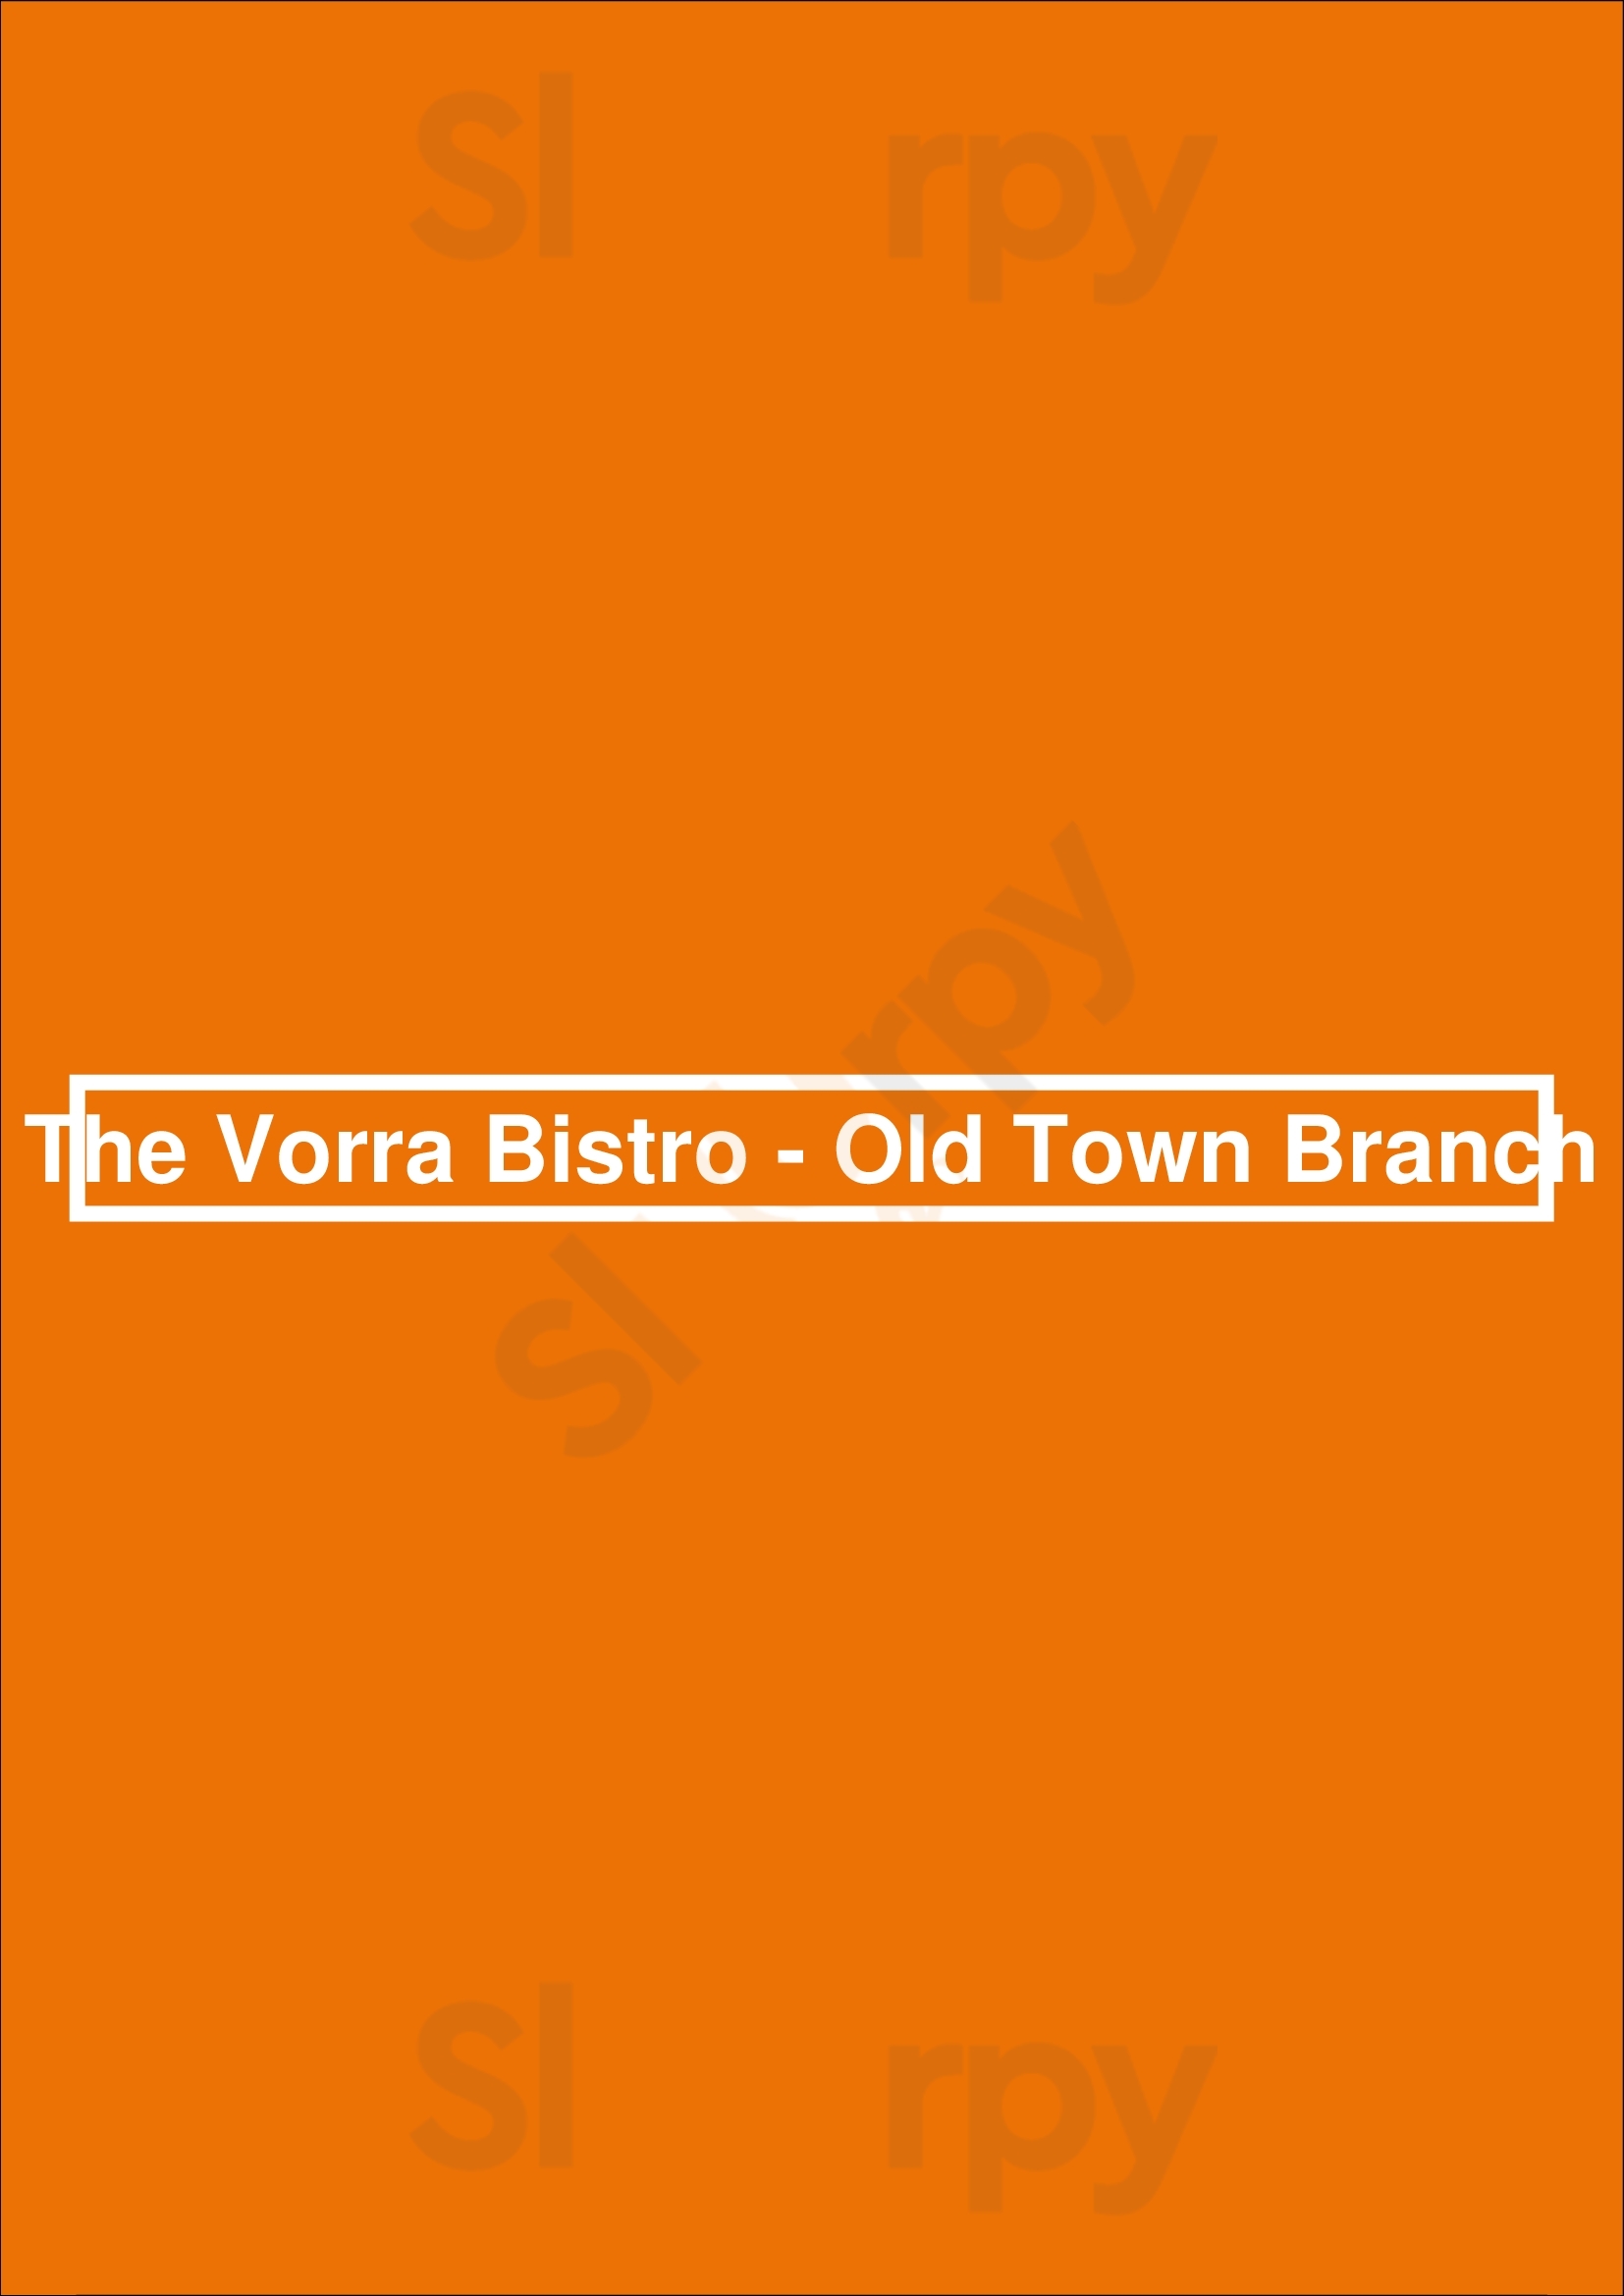 The Vorra Bistro - Old Town Branch เมืองเชียงใหม่ Menu - 1